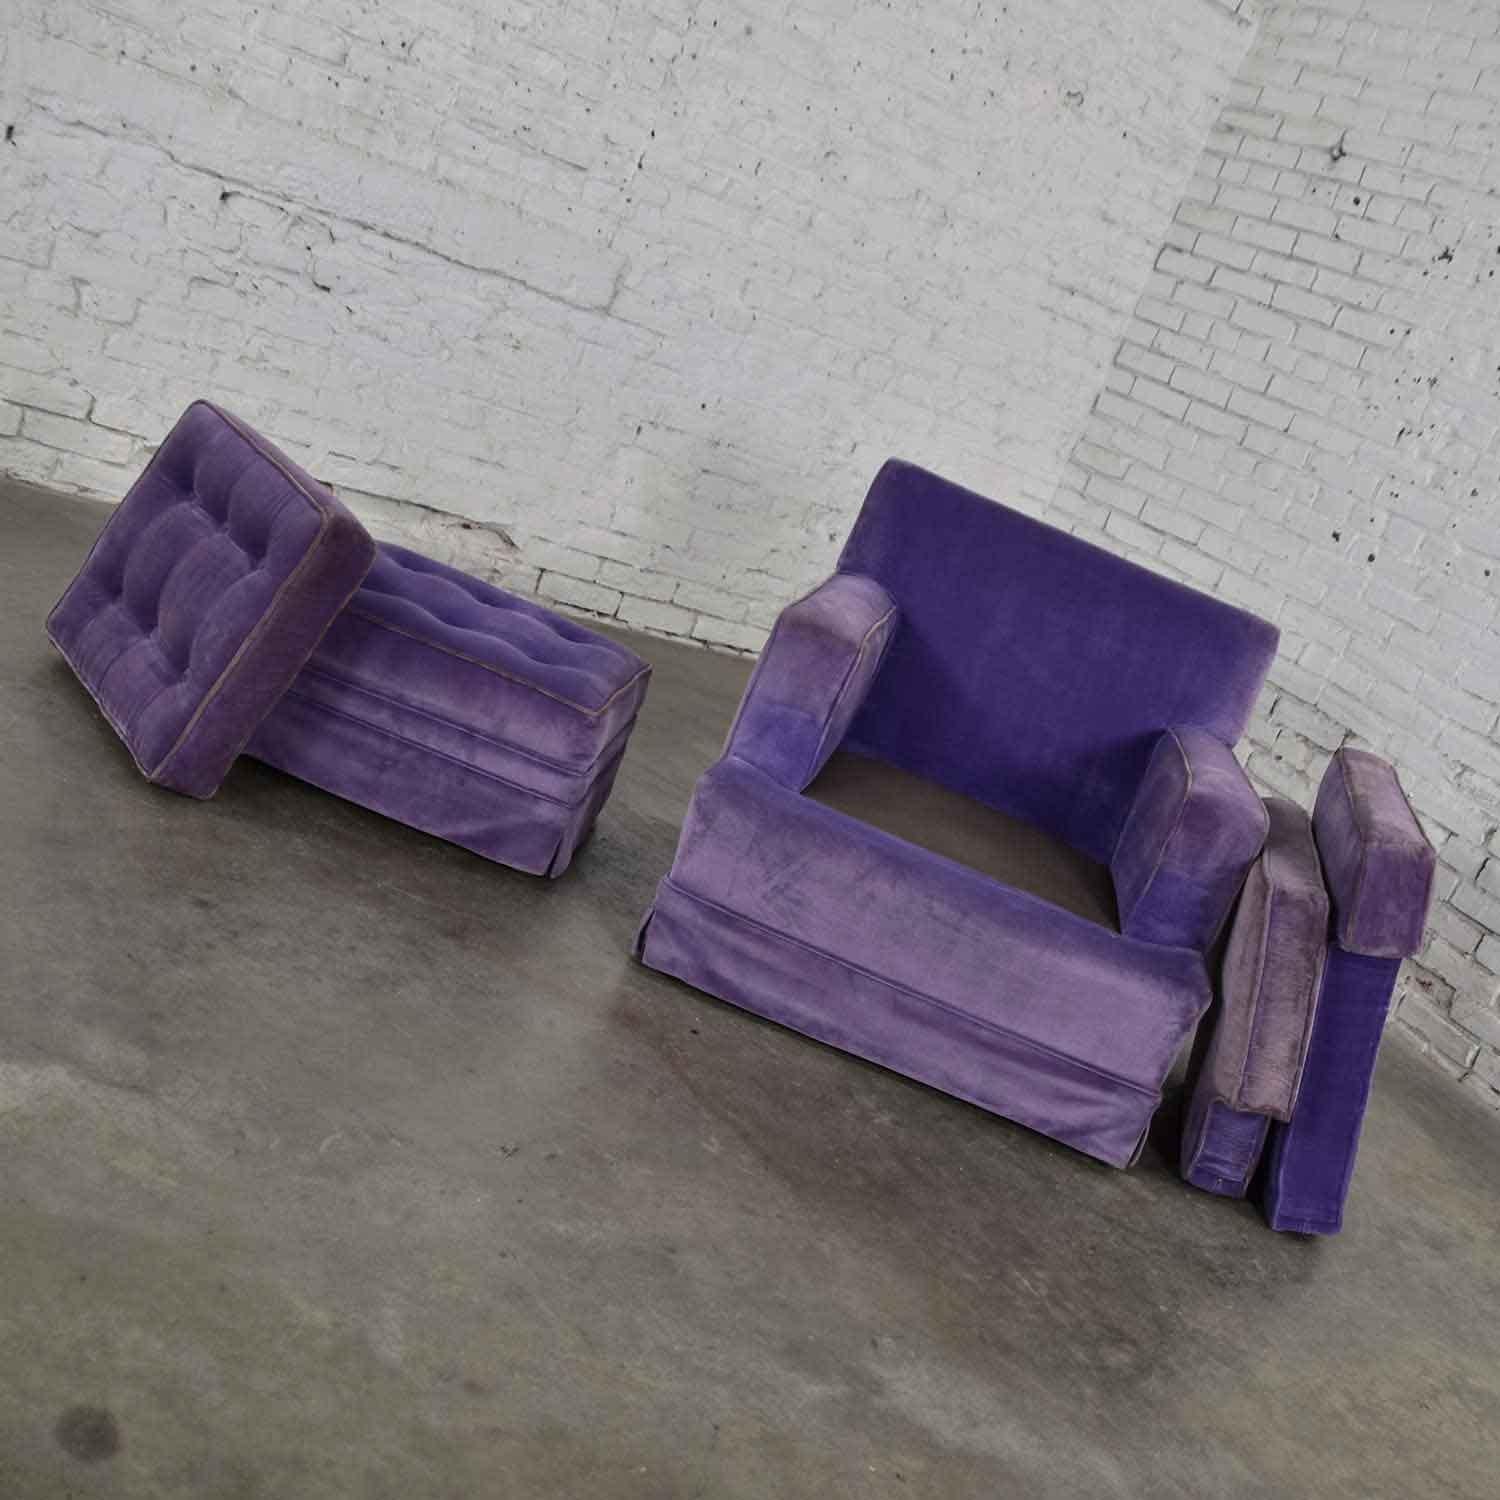 20th Century Mid-Century Modern Purple Velvet Lawson Style Vintage Club Chair and Ottoman